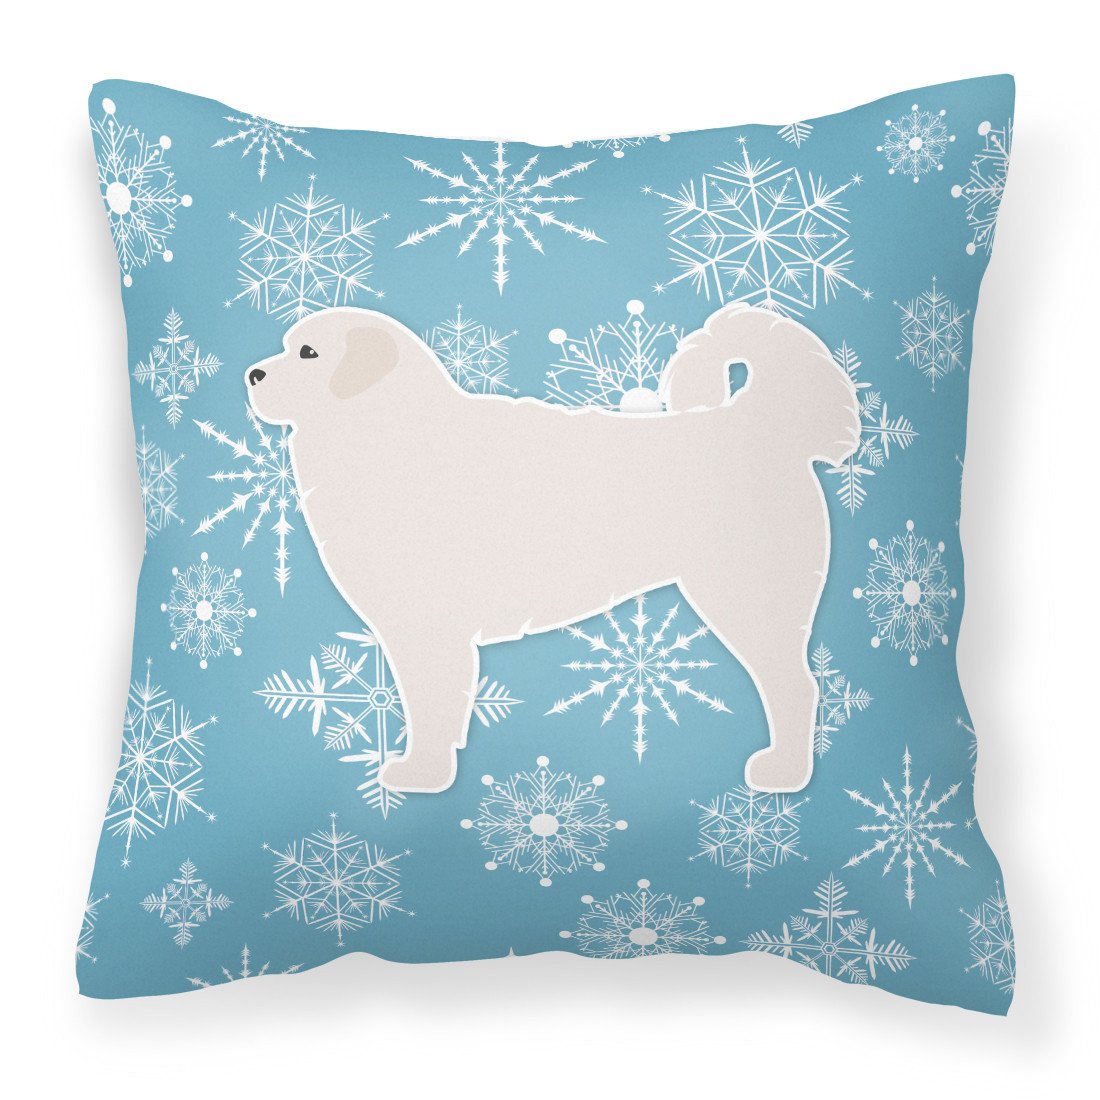 Winter Snowflake Polish Tatra Sheepdog Fabric Decorative Pillow BB3527PW1818 by Caroline's Treasures